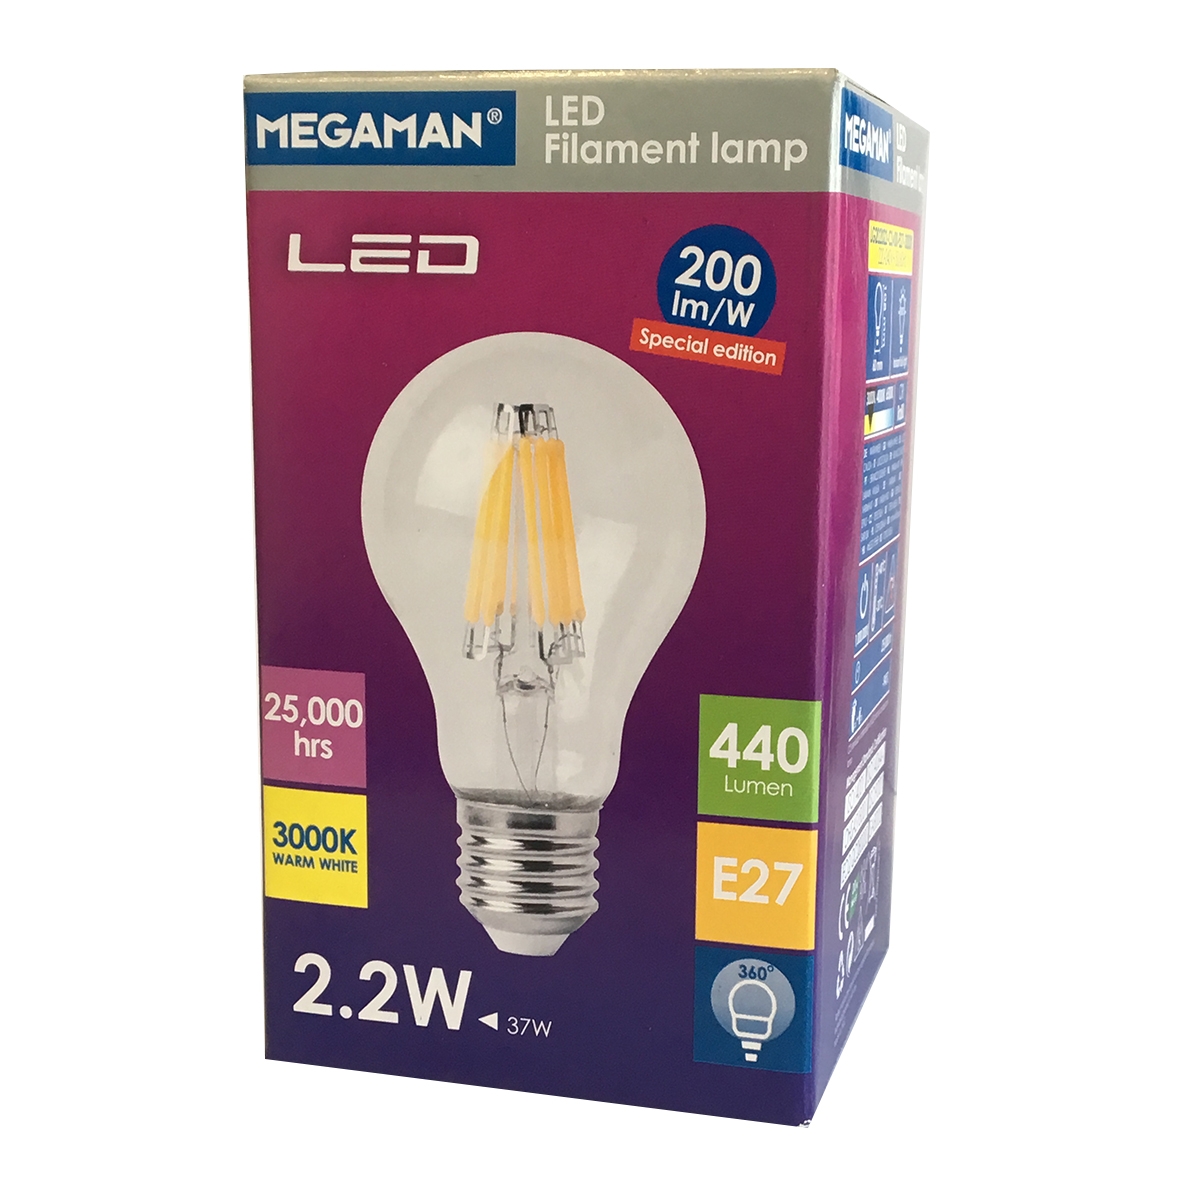 Megaman E27 Special Edition LED Classic Filament Bulb LG202022-CSv00 2.2W 3000K - Warm White 